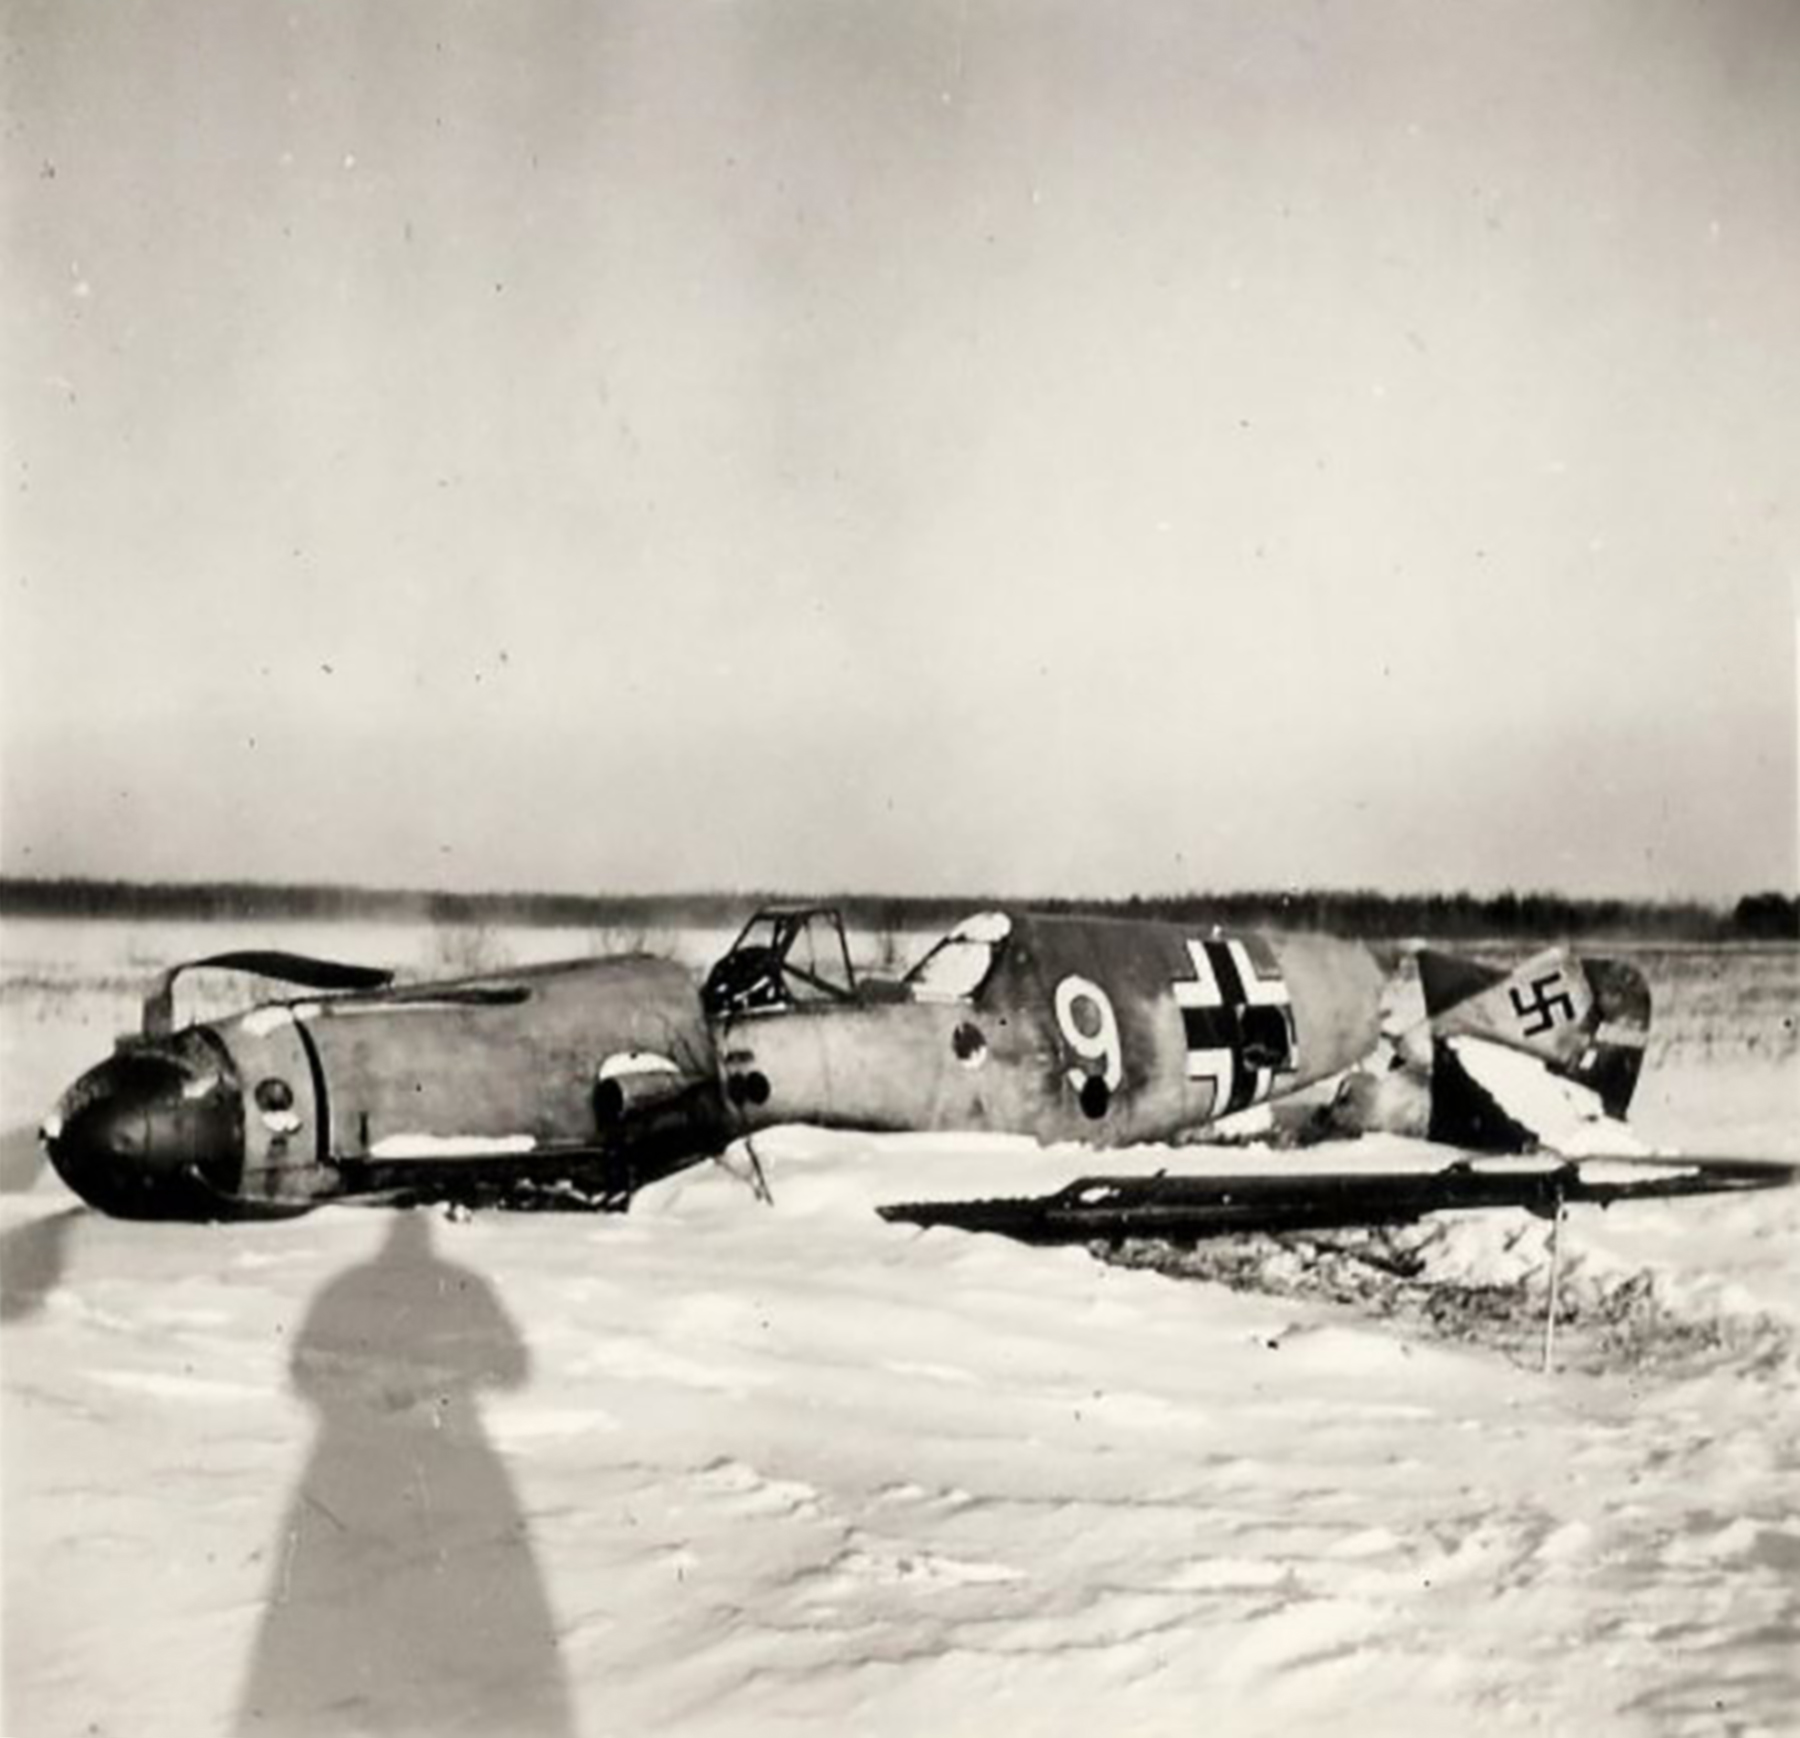 Messerschmitt Bf 109F2 1.JG51 White 9 crash site ebay 01